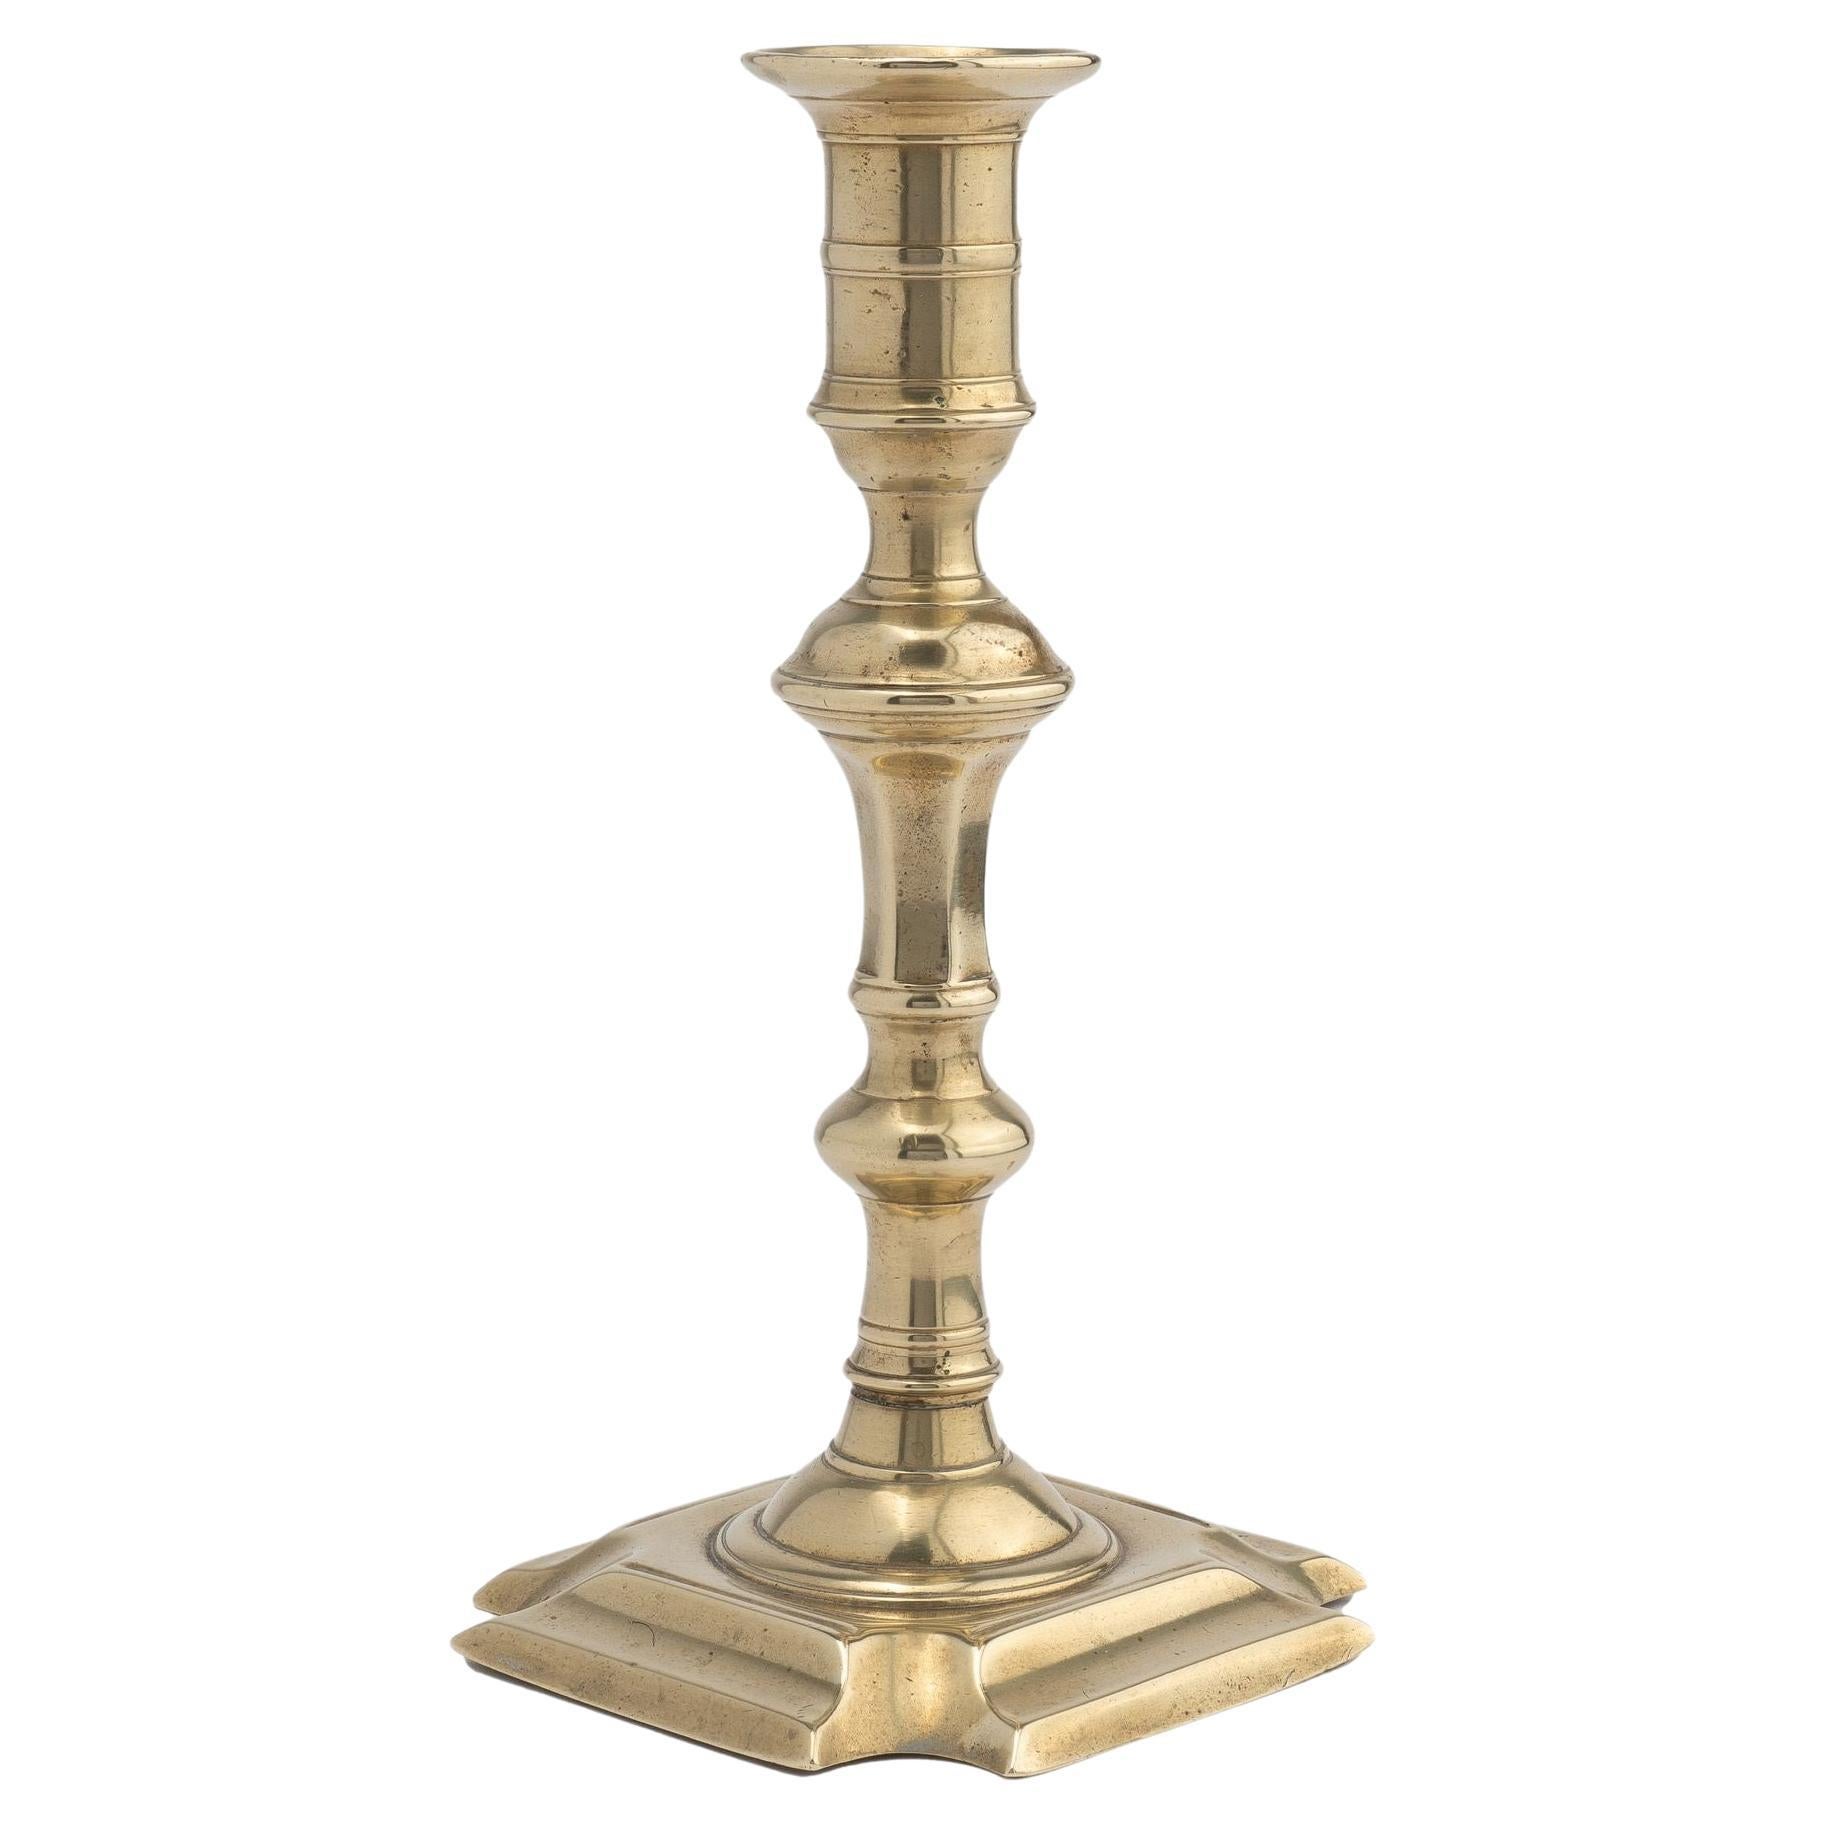 English Queen Anne brass candlestick, 1750-60